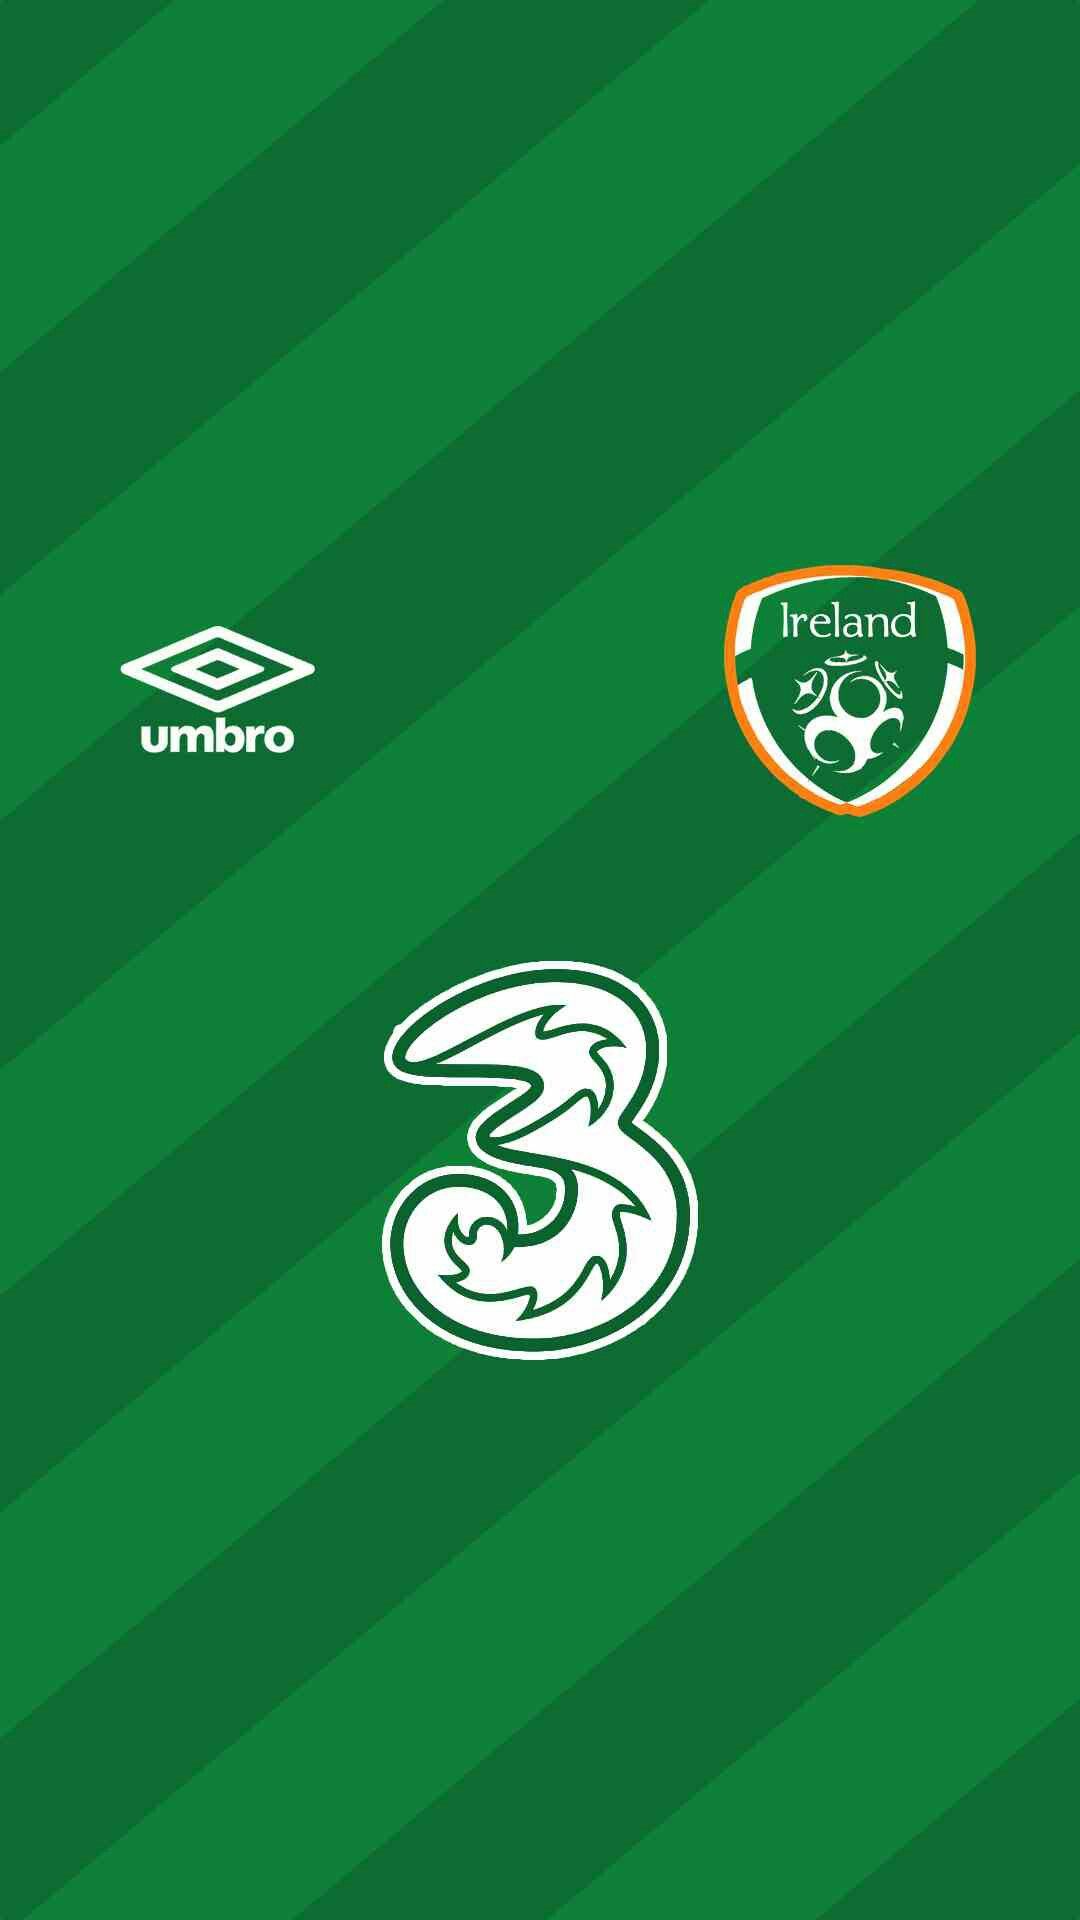 Republic of Ireland wallpaper. Football wallpaper, Republic, Republic of ireland